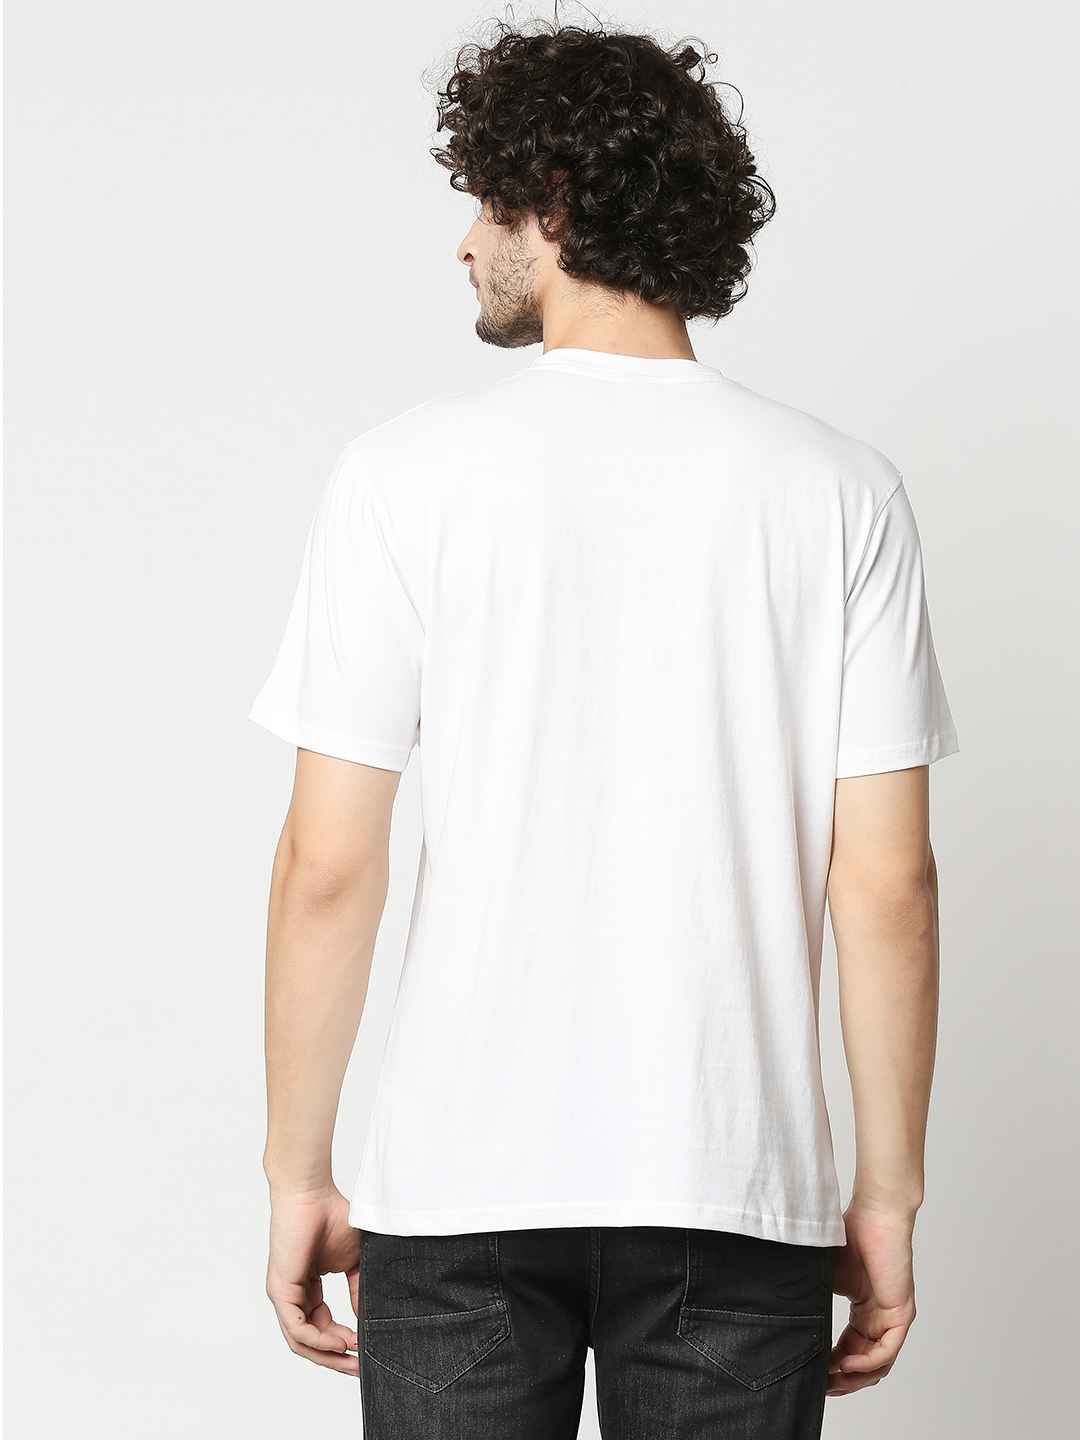 Buy Men's Comfort fit White chest print T-shirt